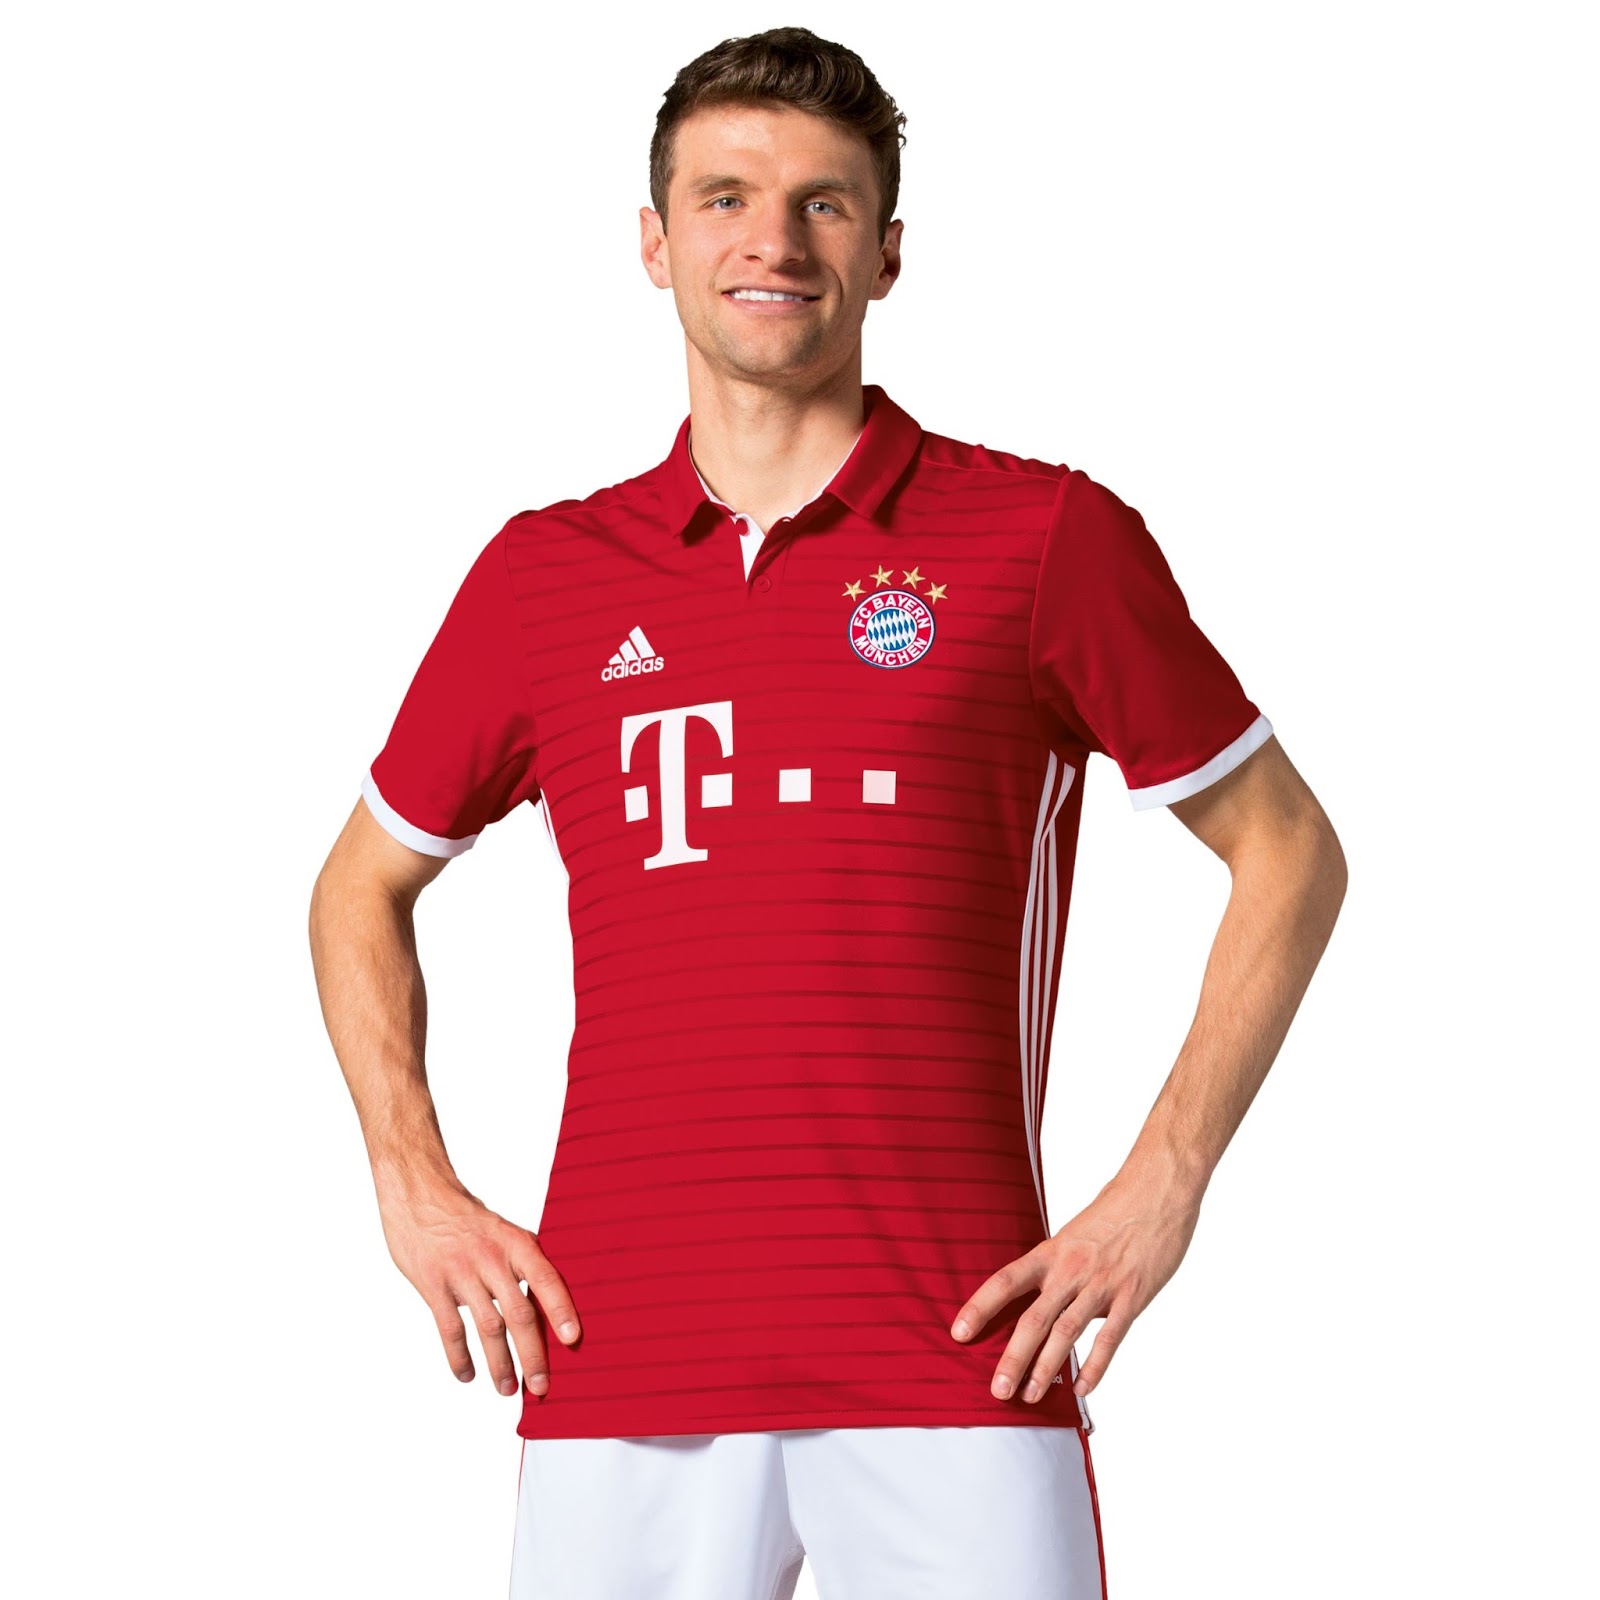 Saiu a nova camisa do Bayern de Munique. Confira as fotos e o vídeo de